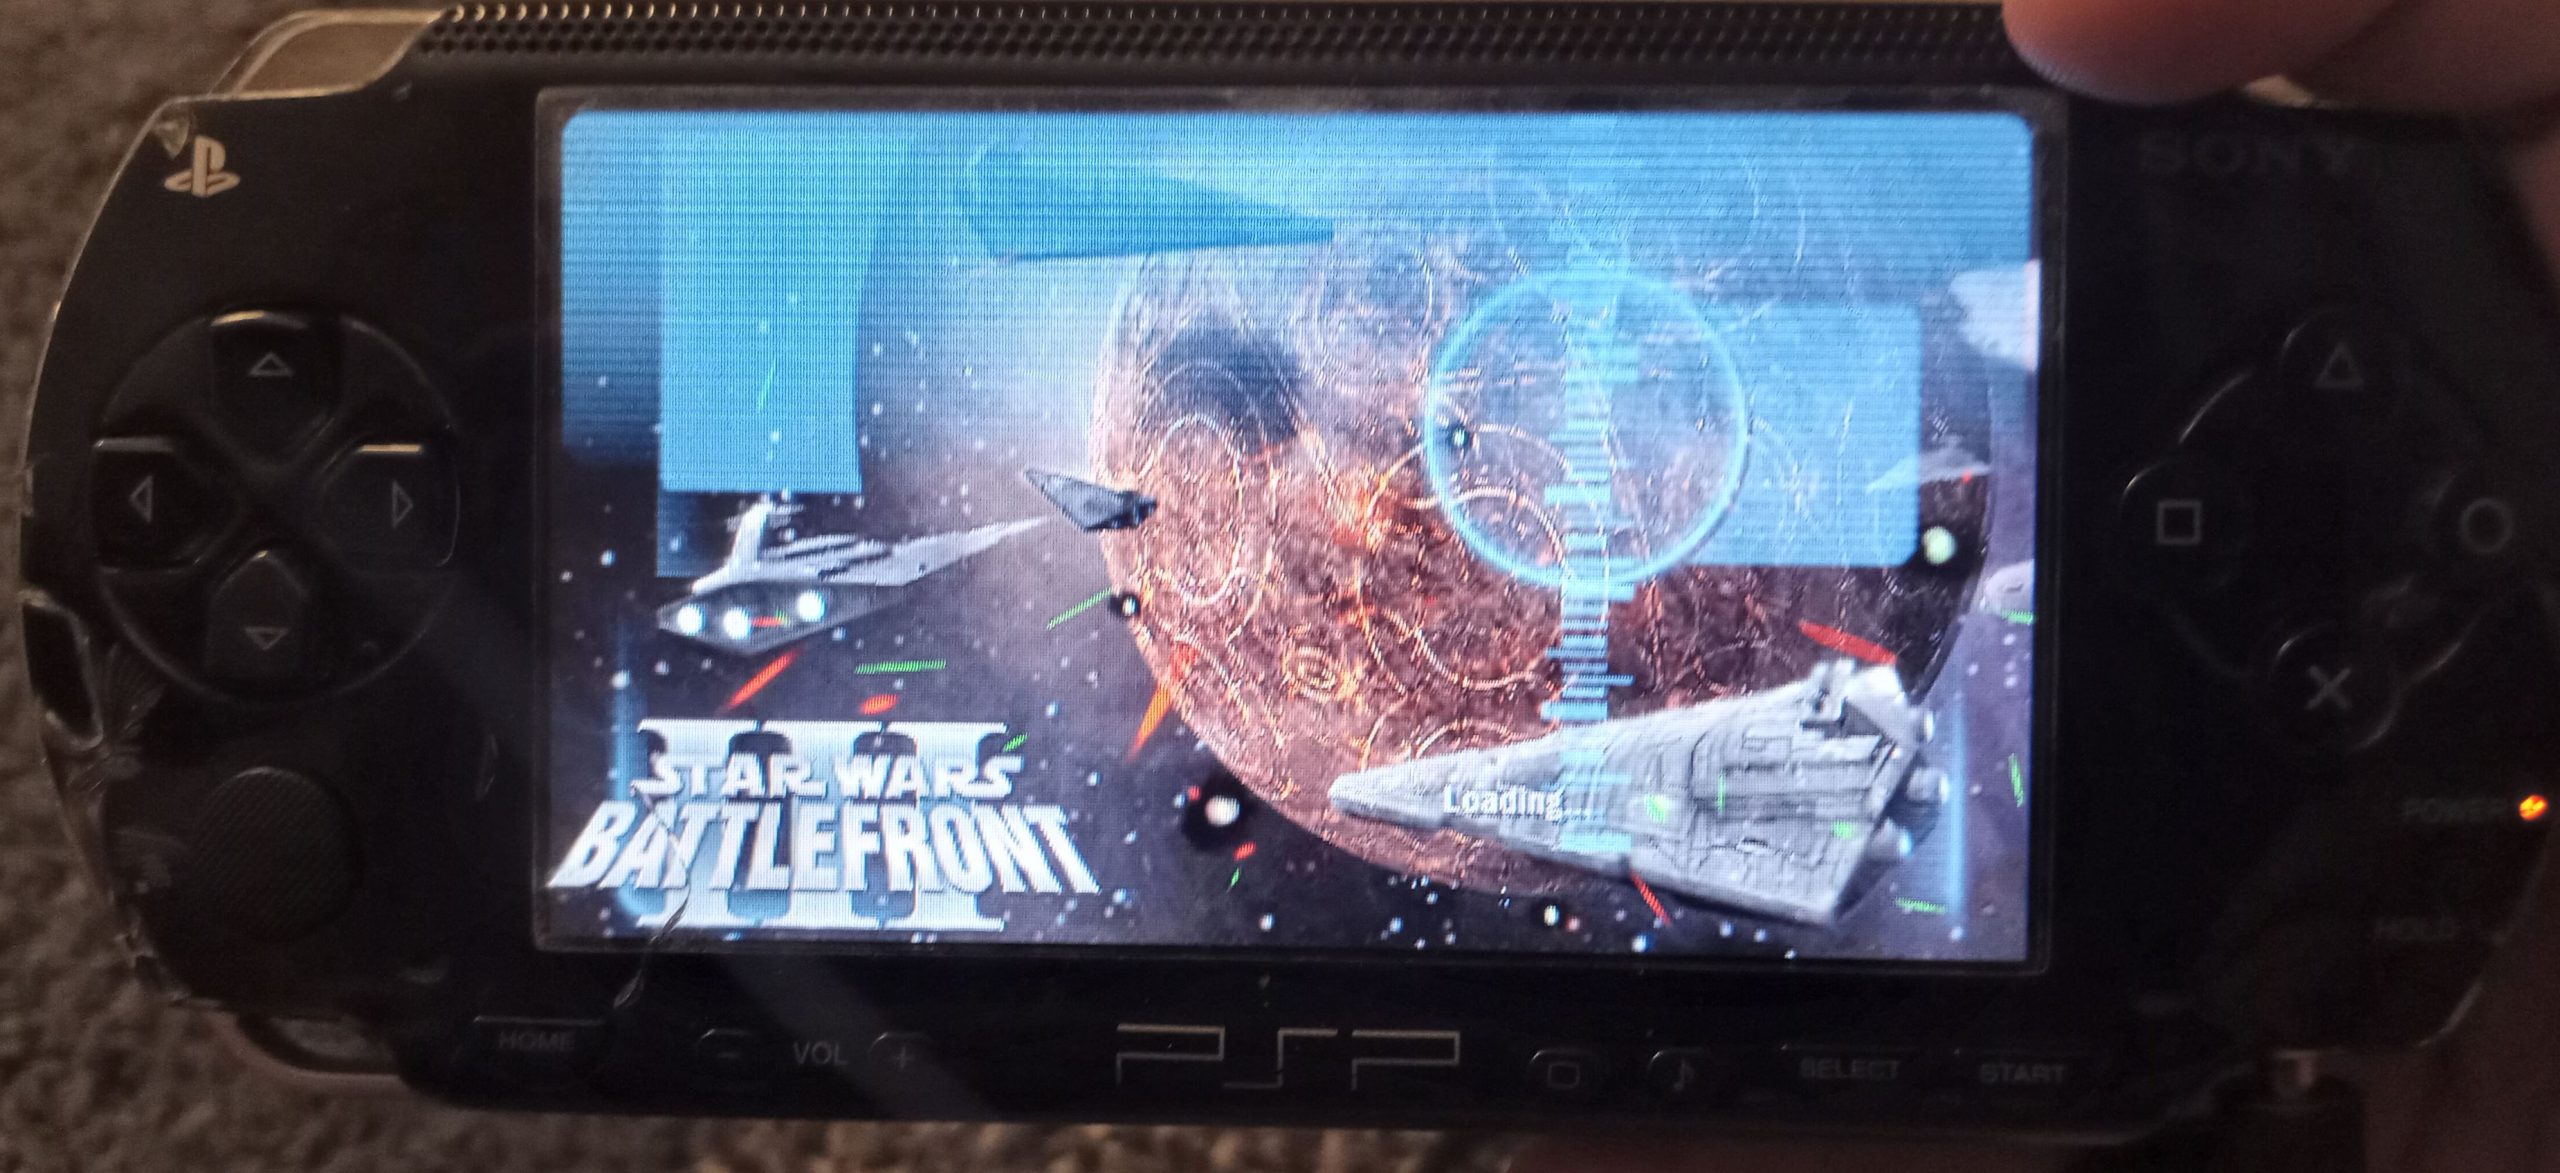 Photo potentielle du jeu Star Wars Battlefront 3 annulé.